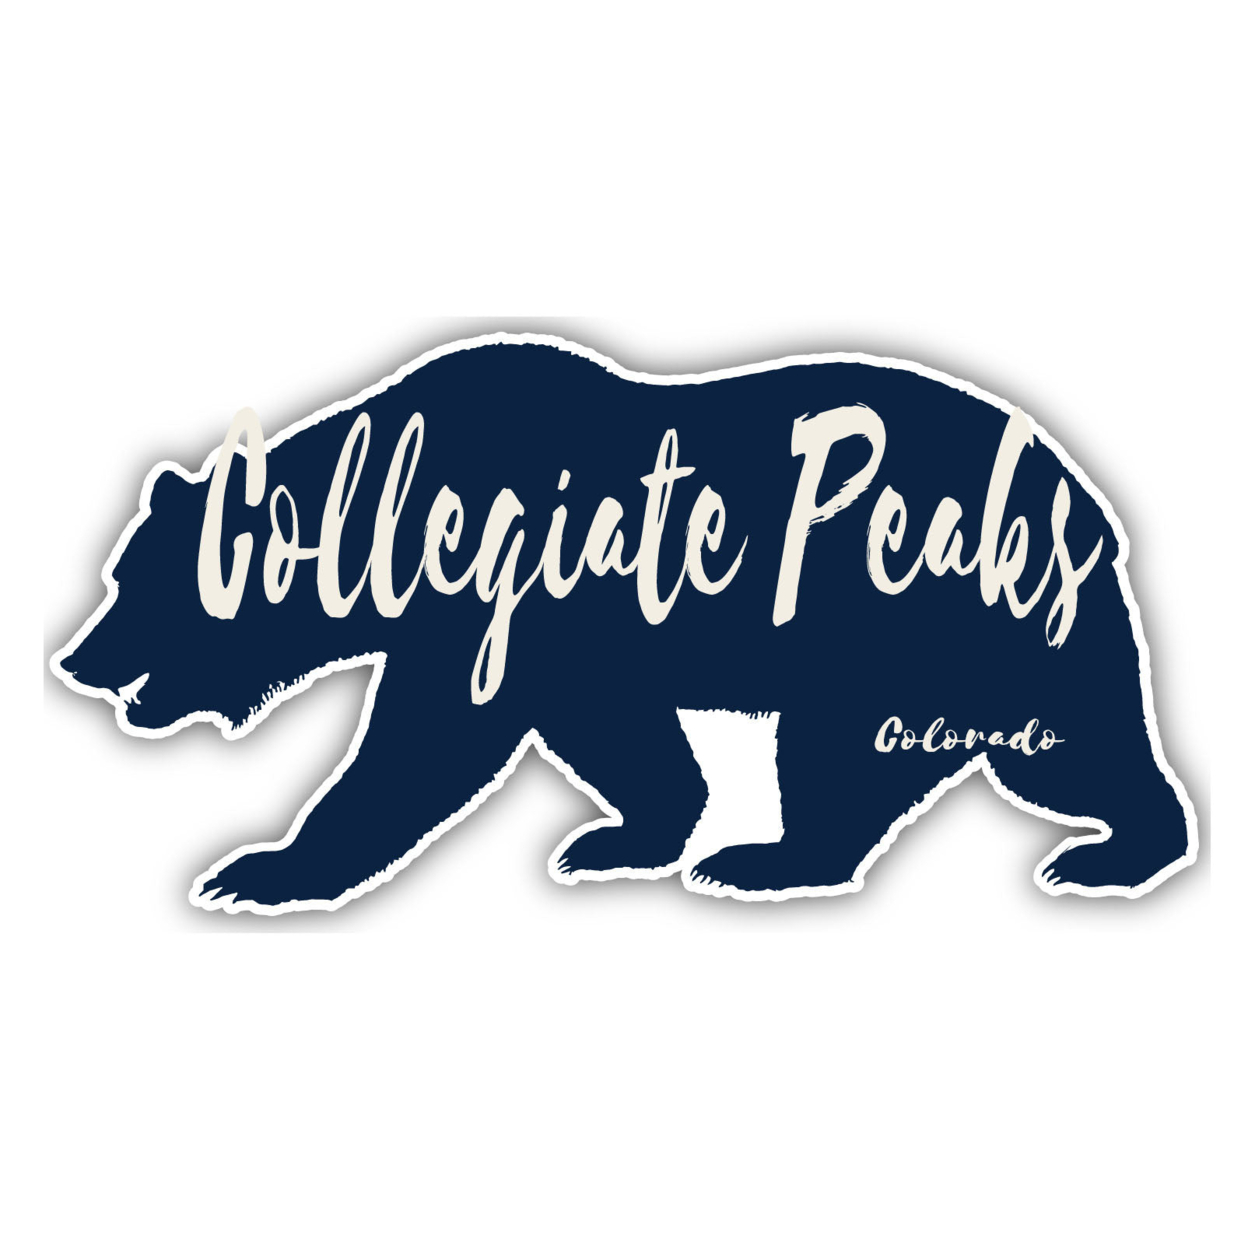 Collegiate Peaks Colorado Souvenir Decorative Stickers (Choose Theme And Size) - Single Unit, 4-Inch, Camp Life